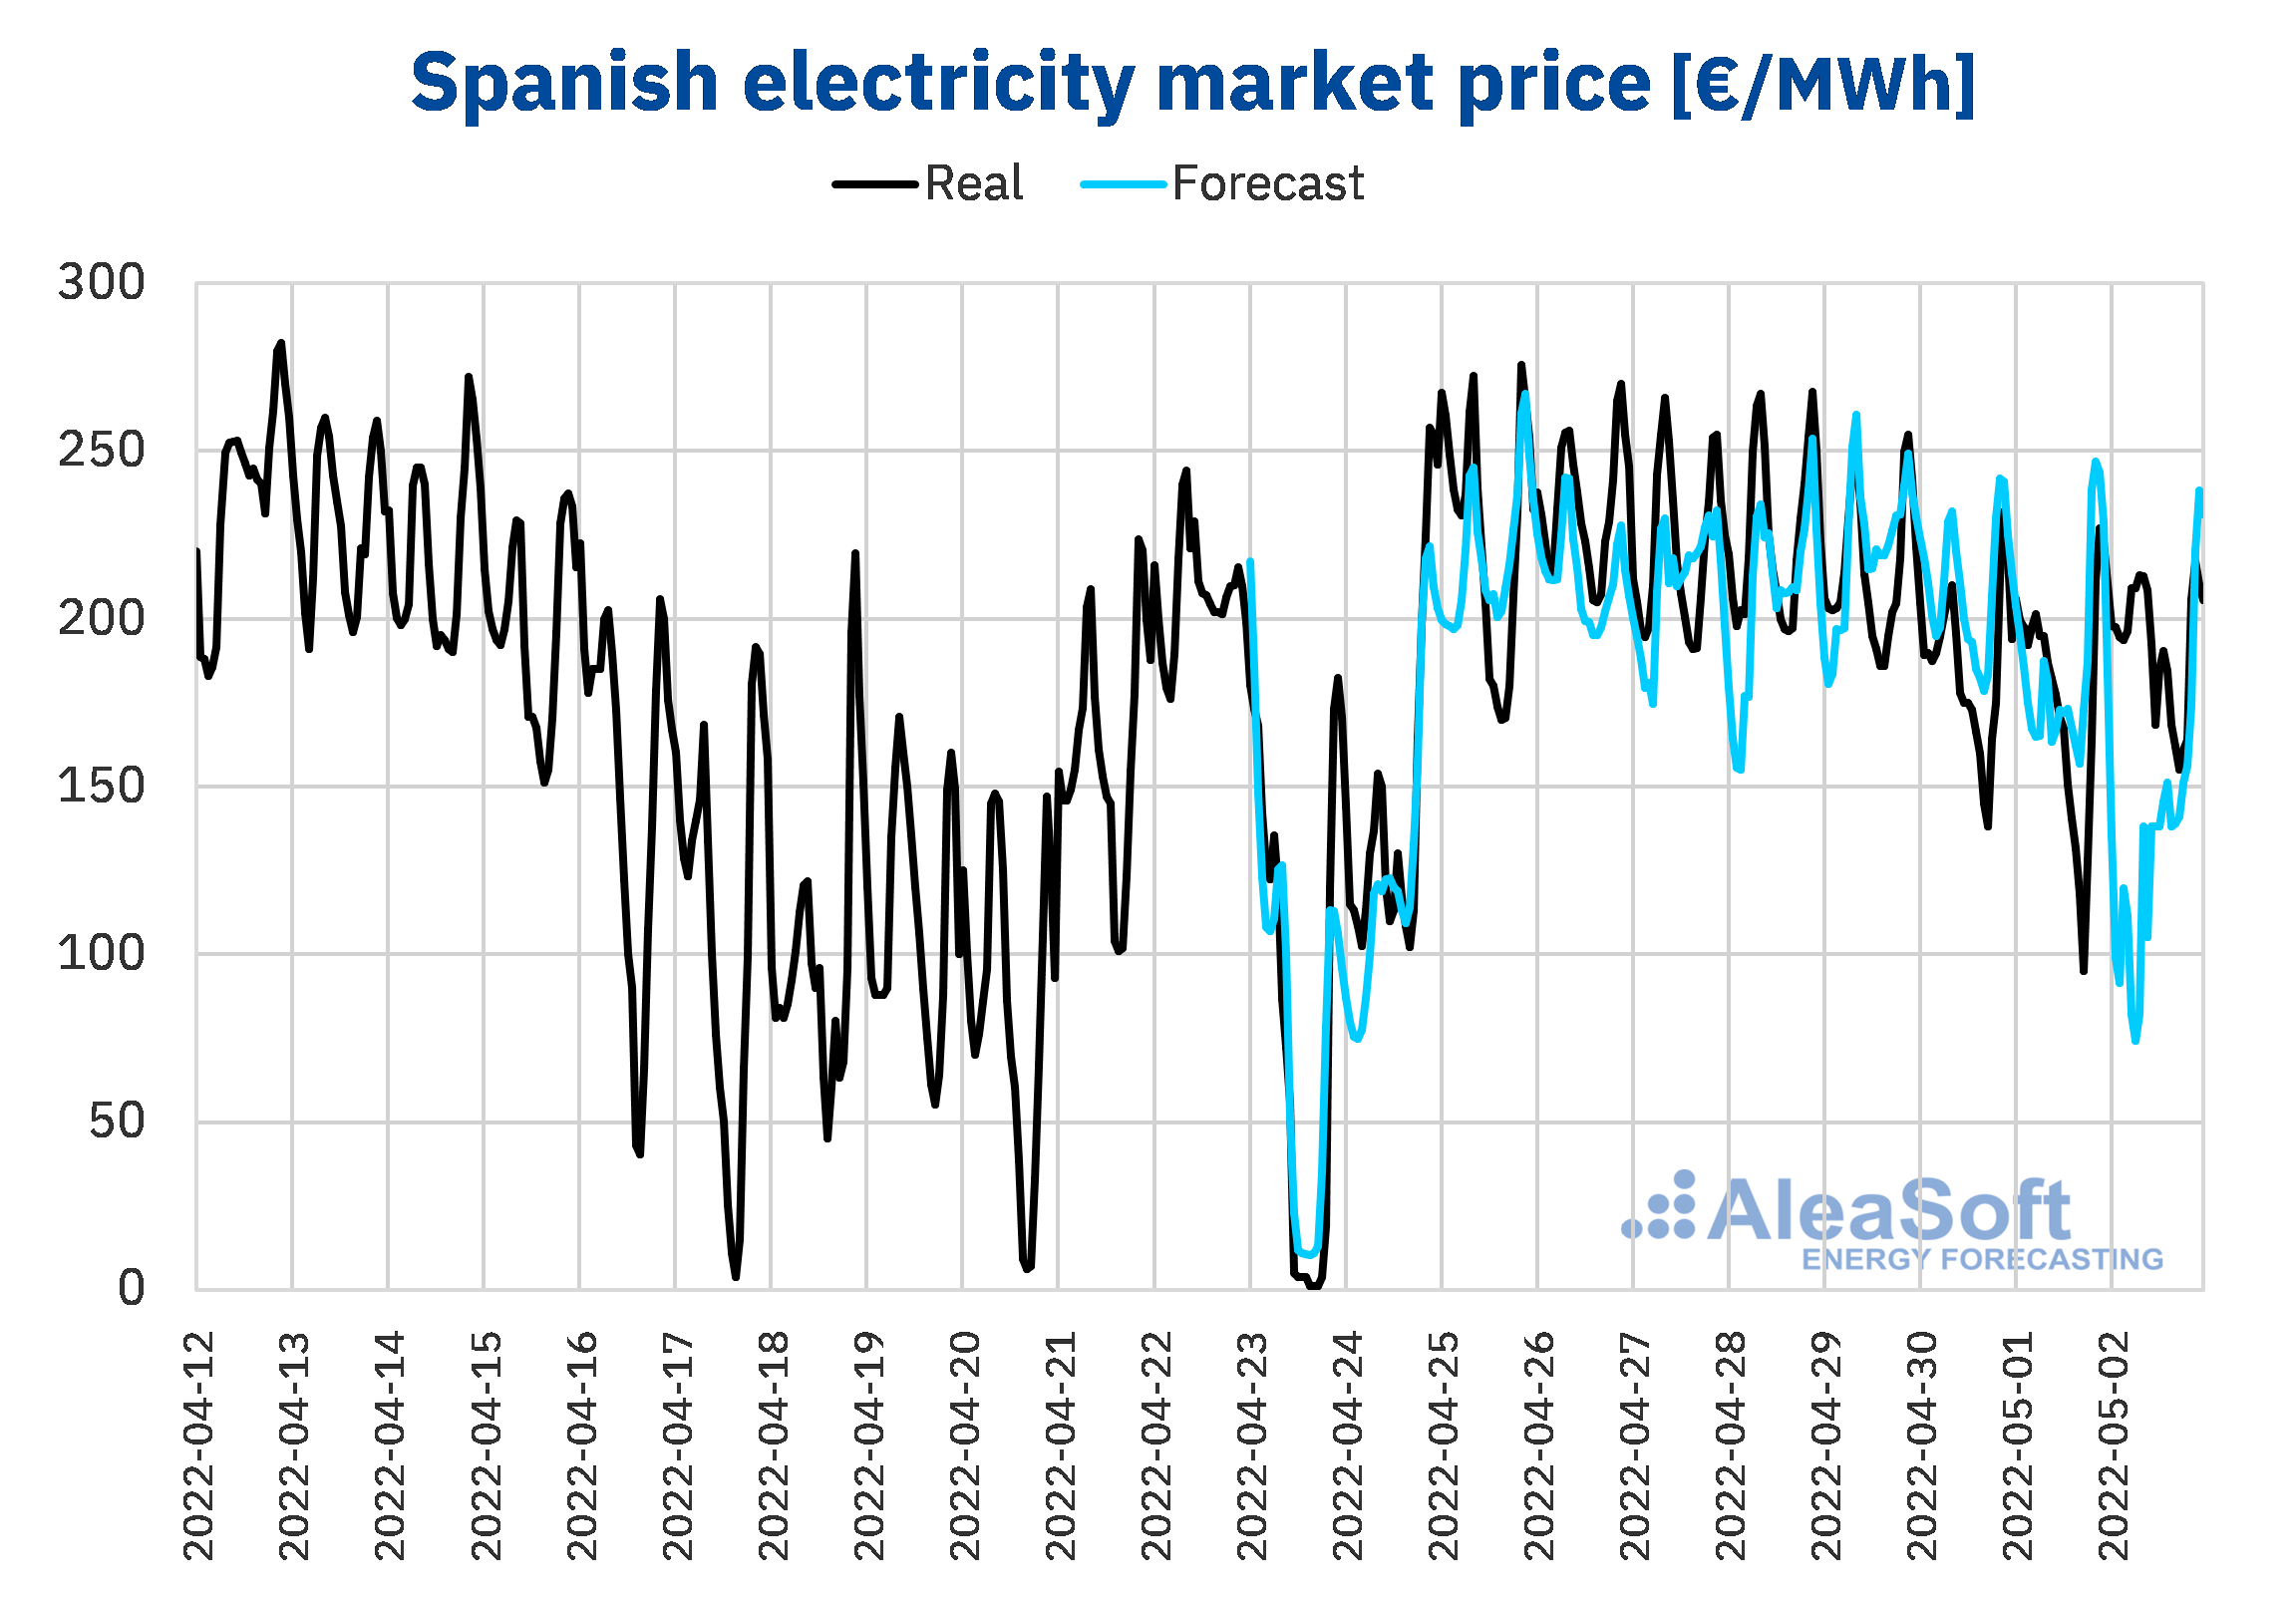 AleaSoft - mibel spain electricity market price forecasting